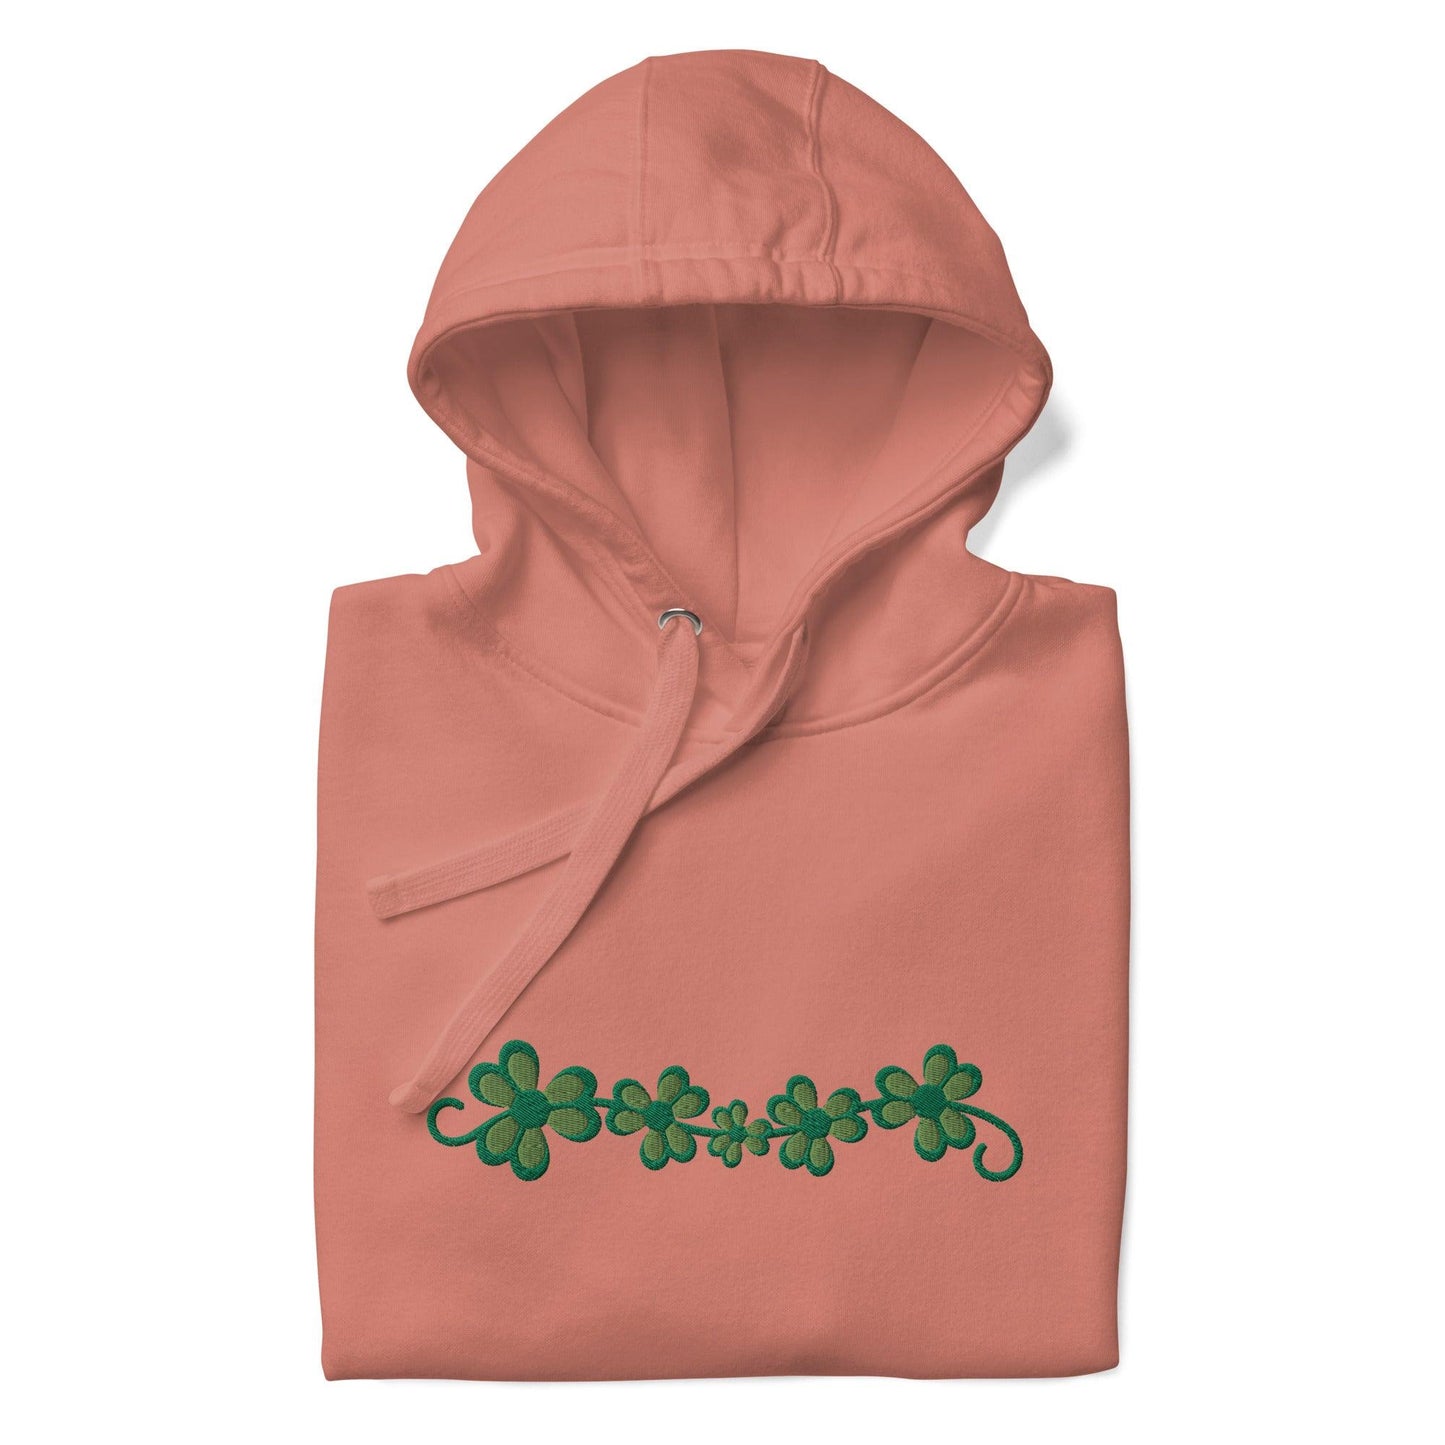 Irish Shamrock Garden Embroidered Hoodie - The Global Wanderer